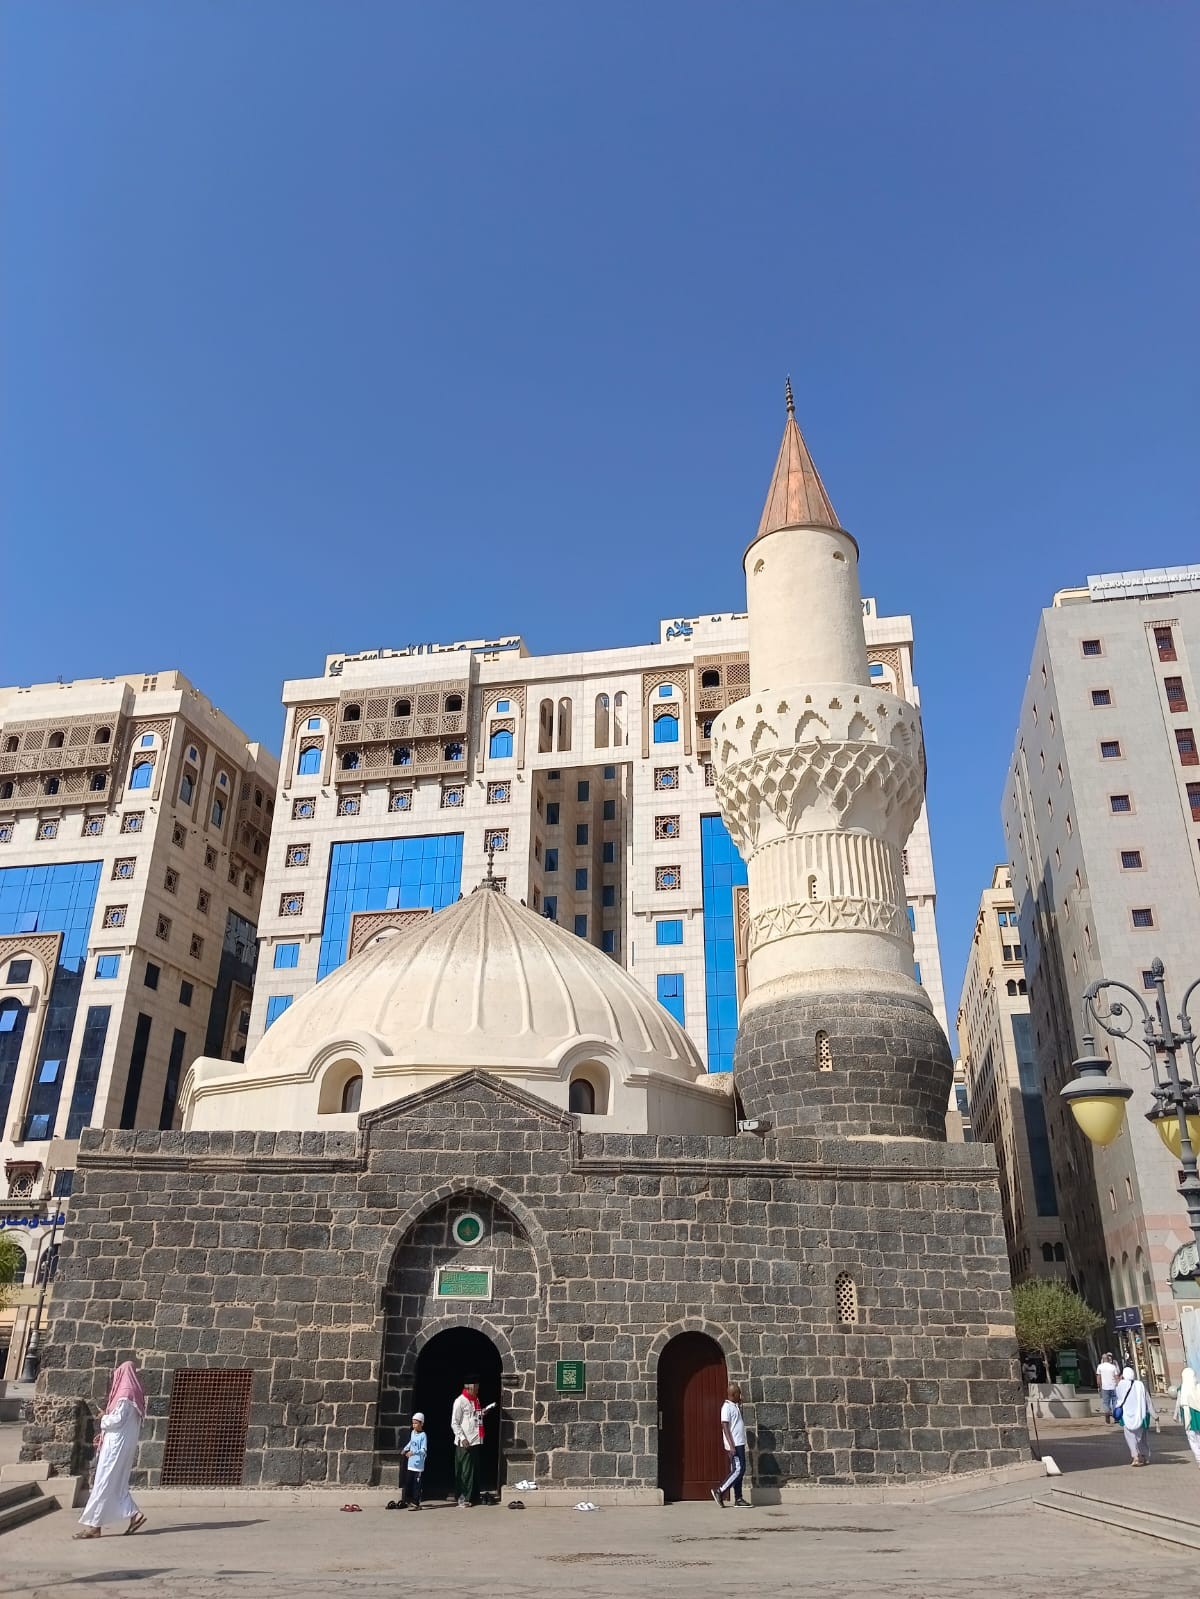 Masjid Abu bakar, Situs Bersejarah Penting di Madinah